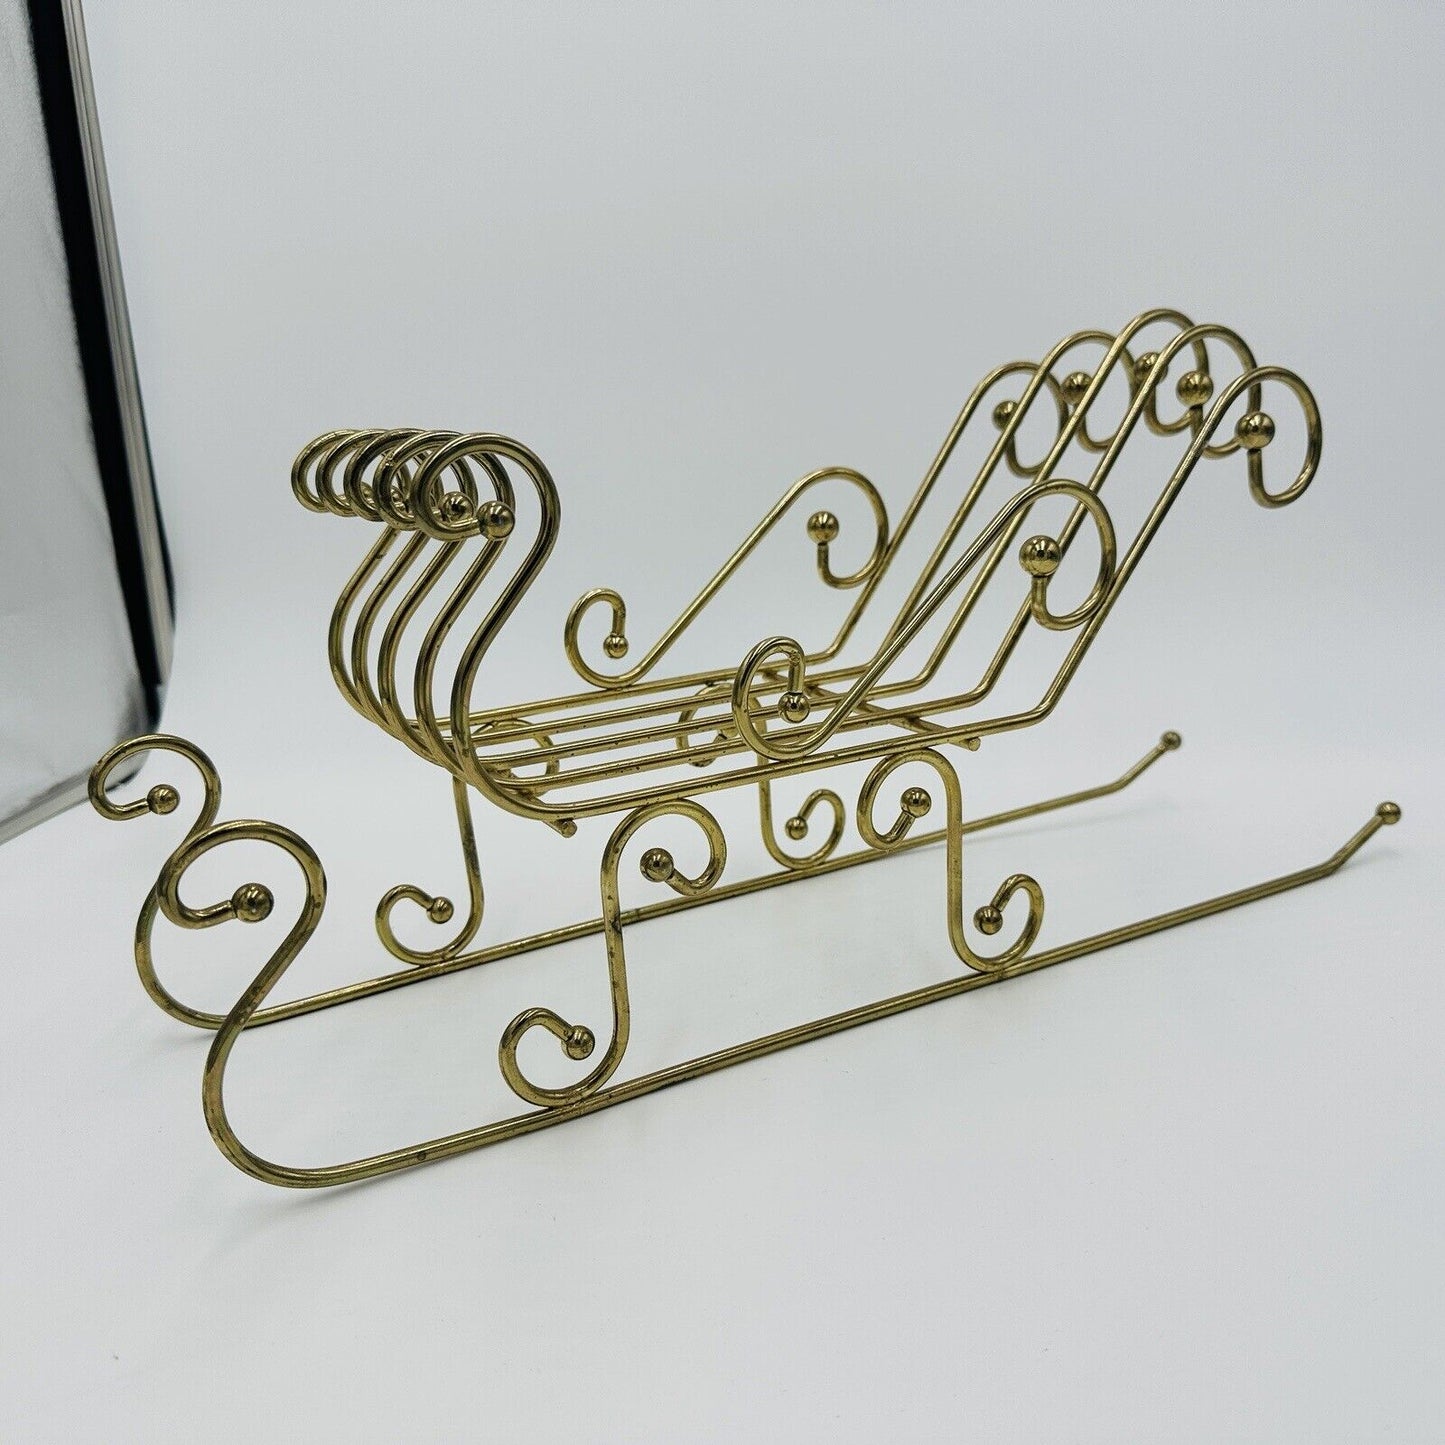 Brass Sleigh Candle Holder Openwork Scroll Design Christmas Decor Centerpiece